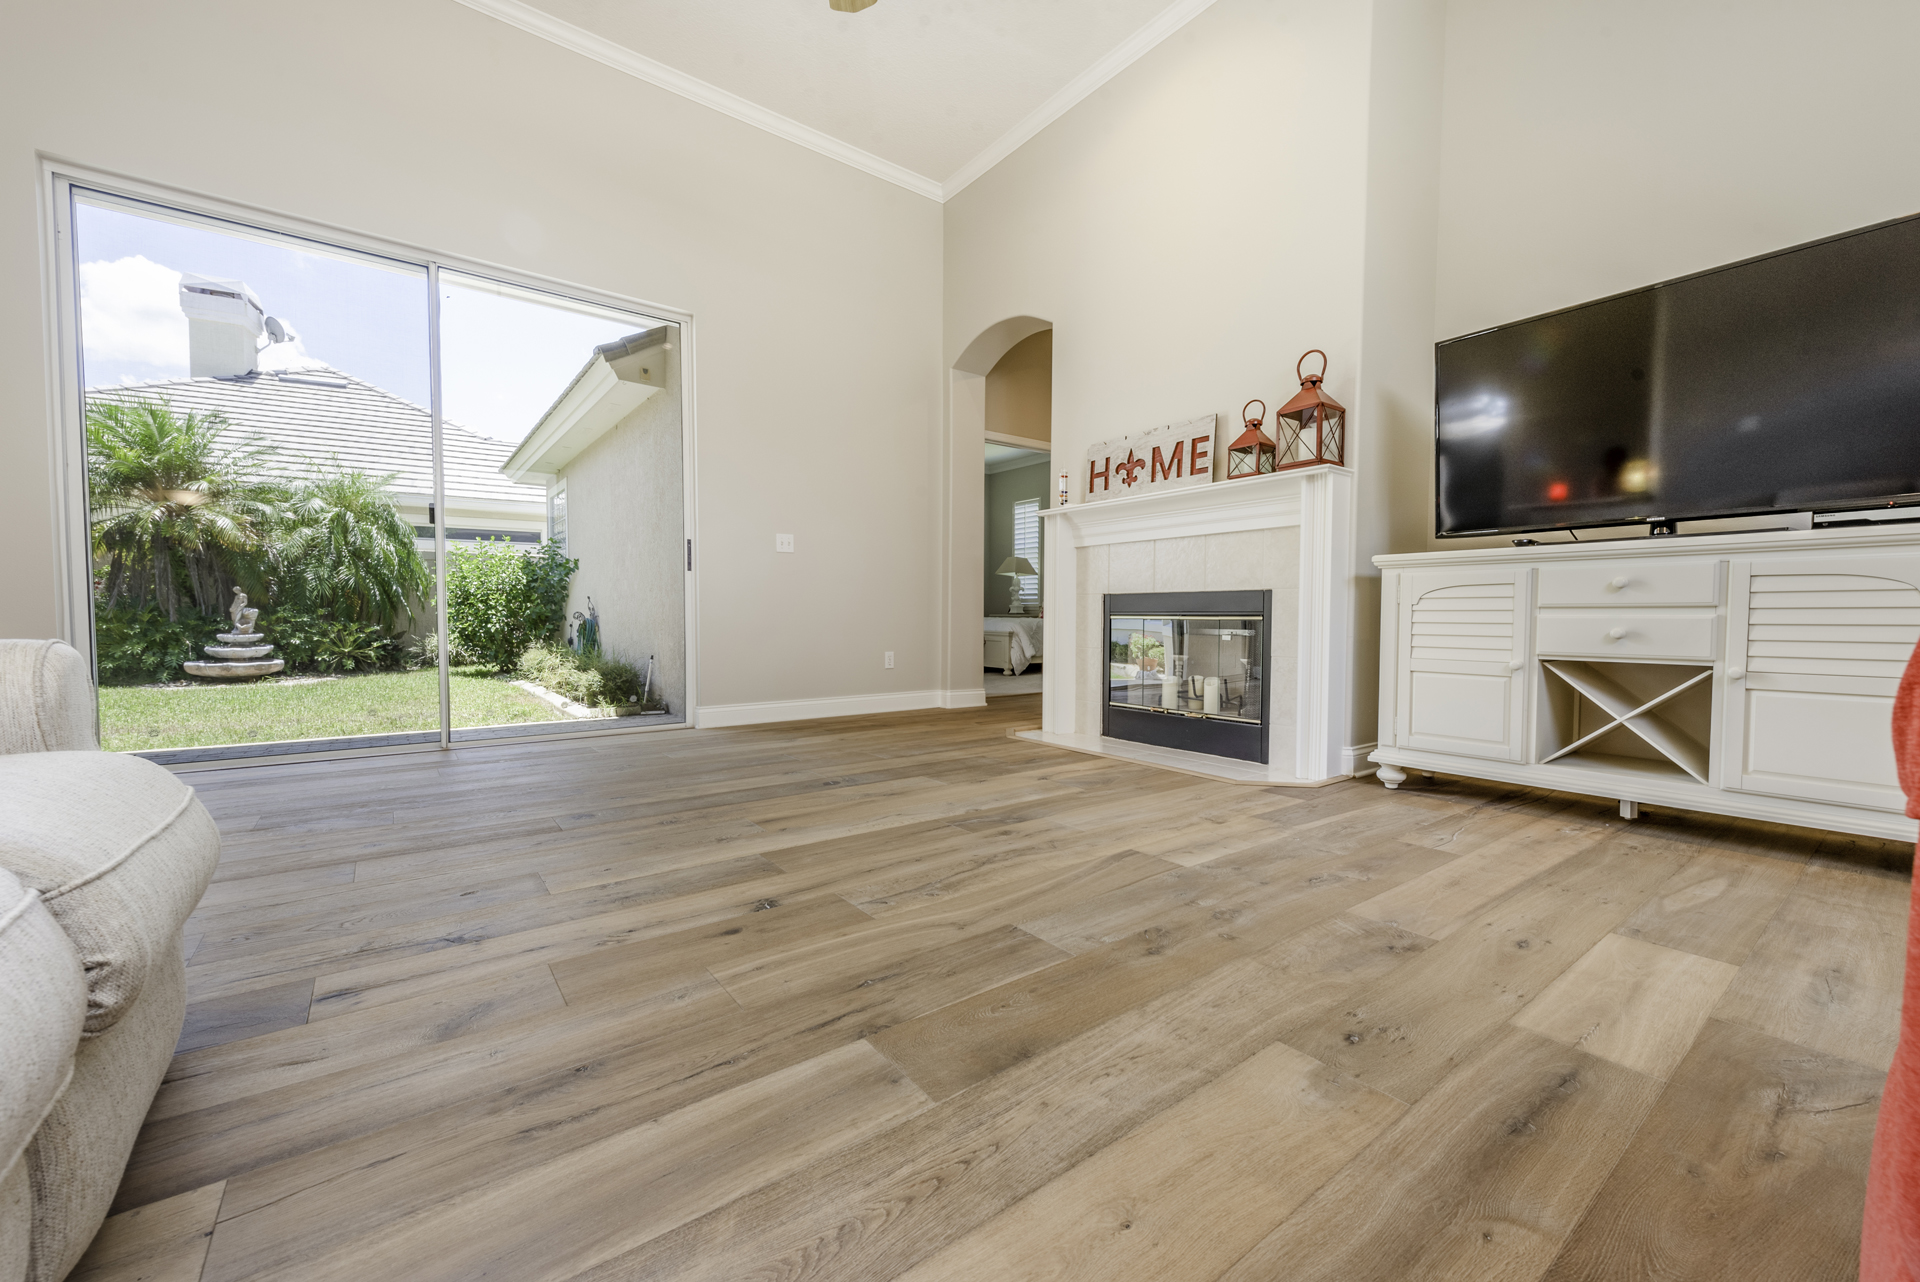 15 Trendy Hardwood Floors In 2020 Among, Hardwood Floor Styles